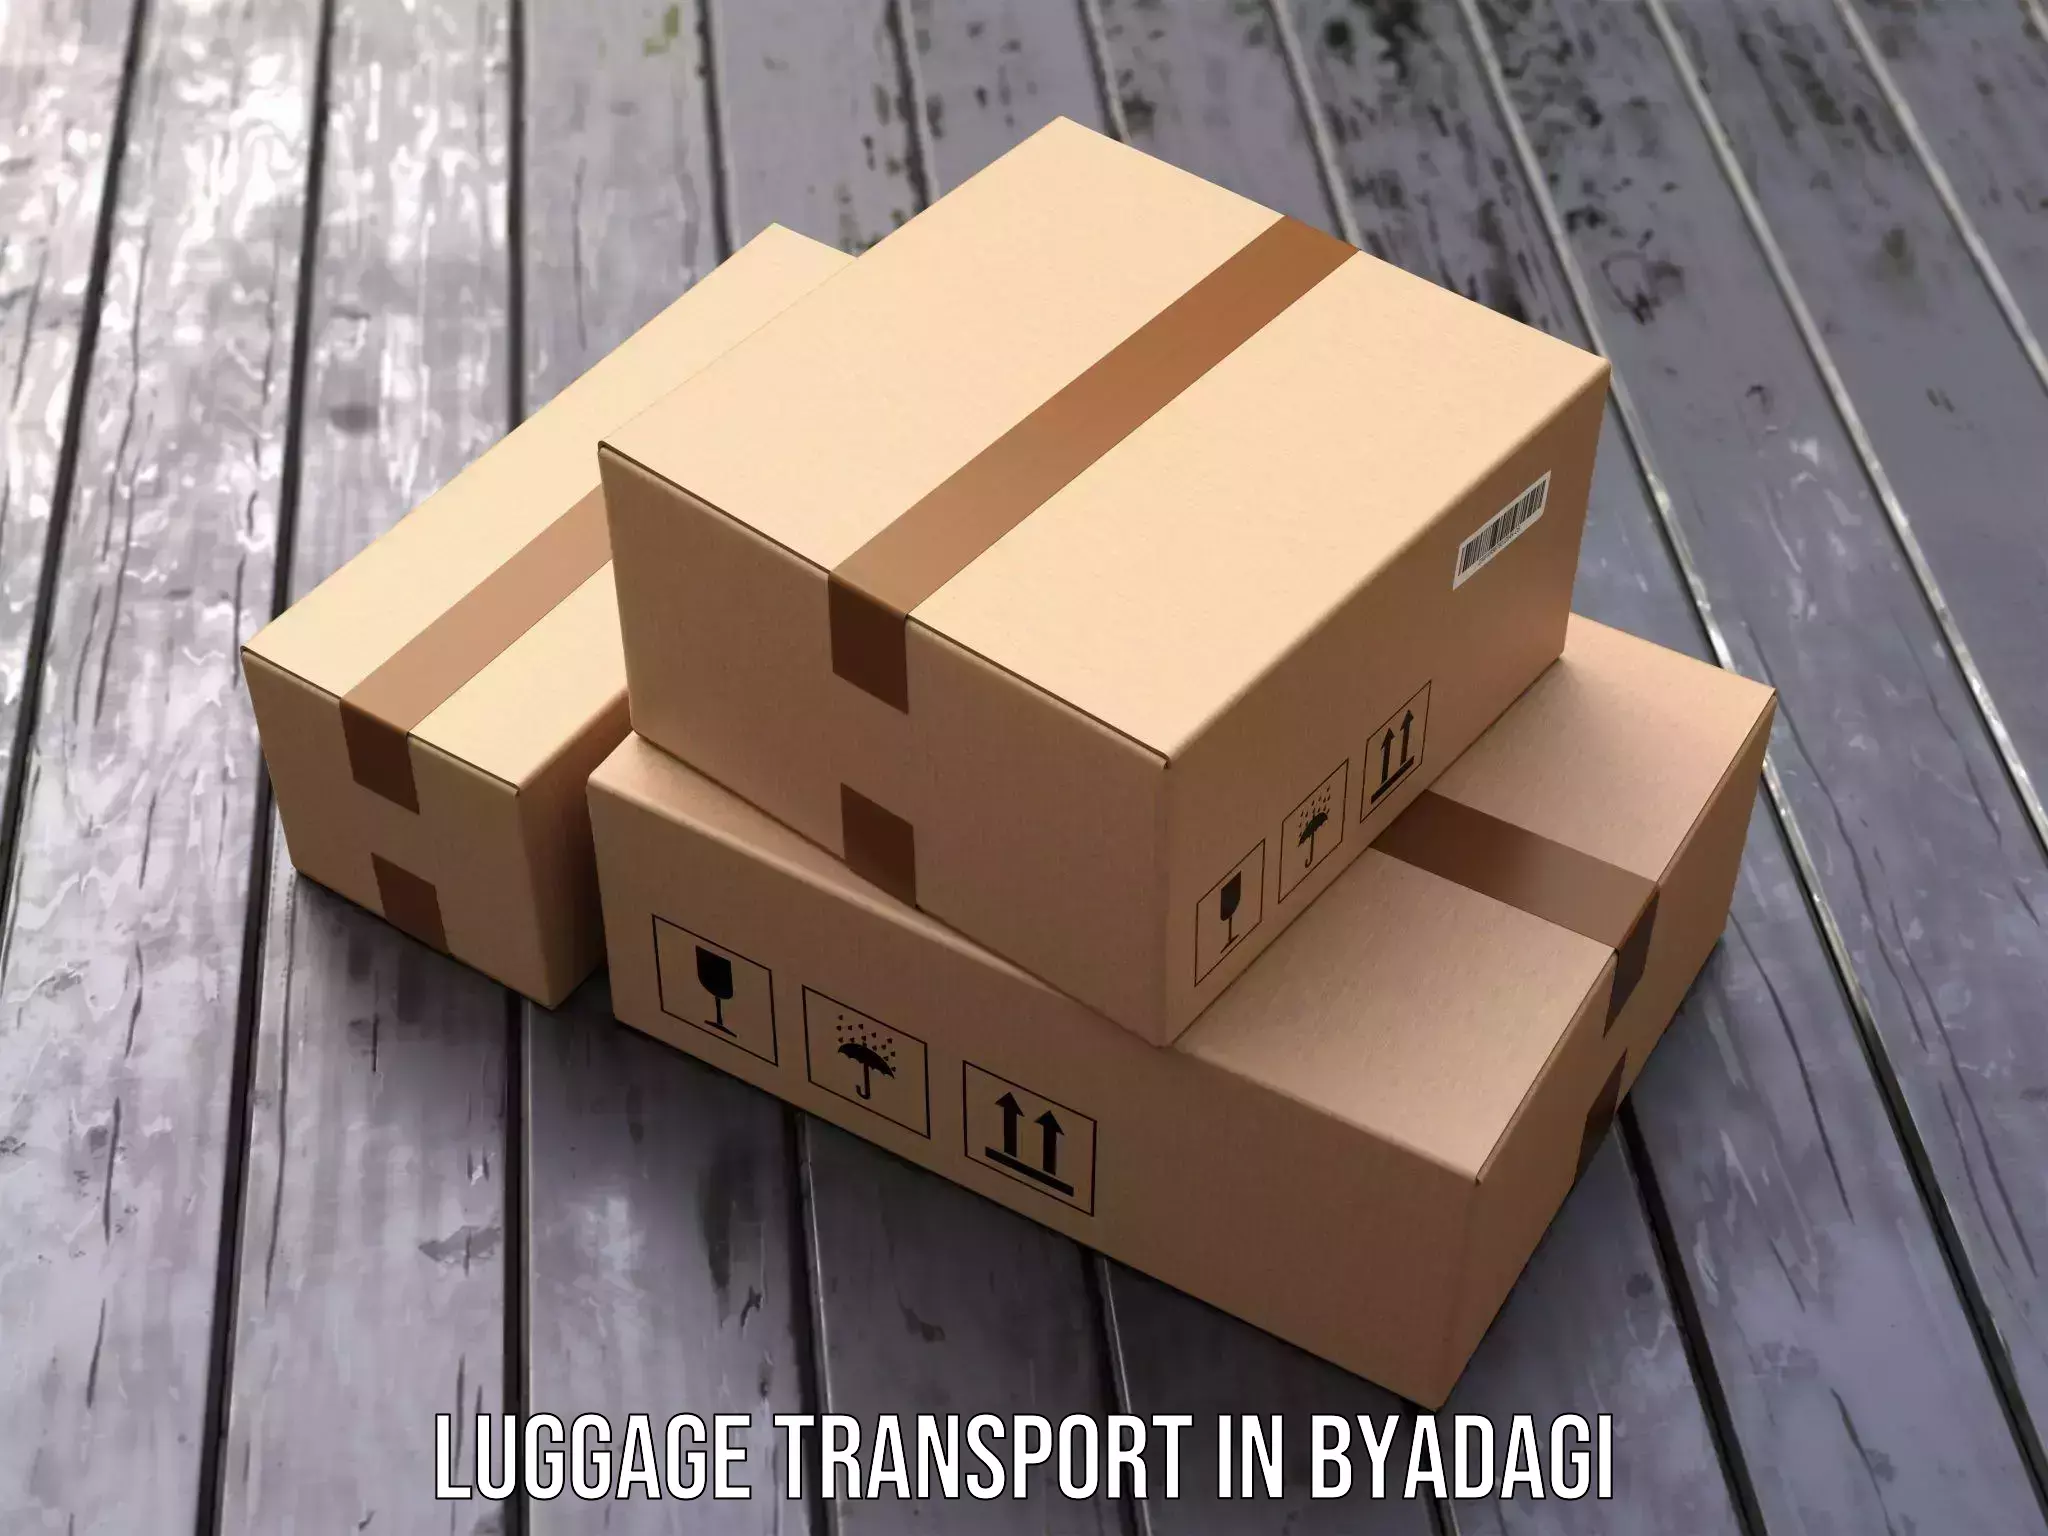 Luggage delivery optimization in Byadagi